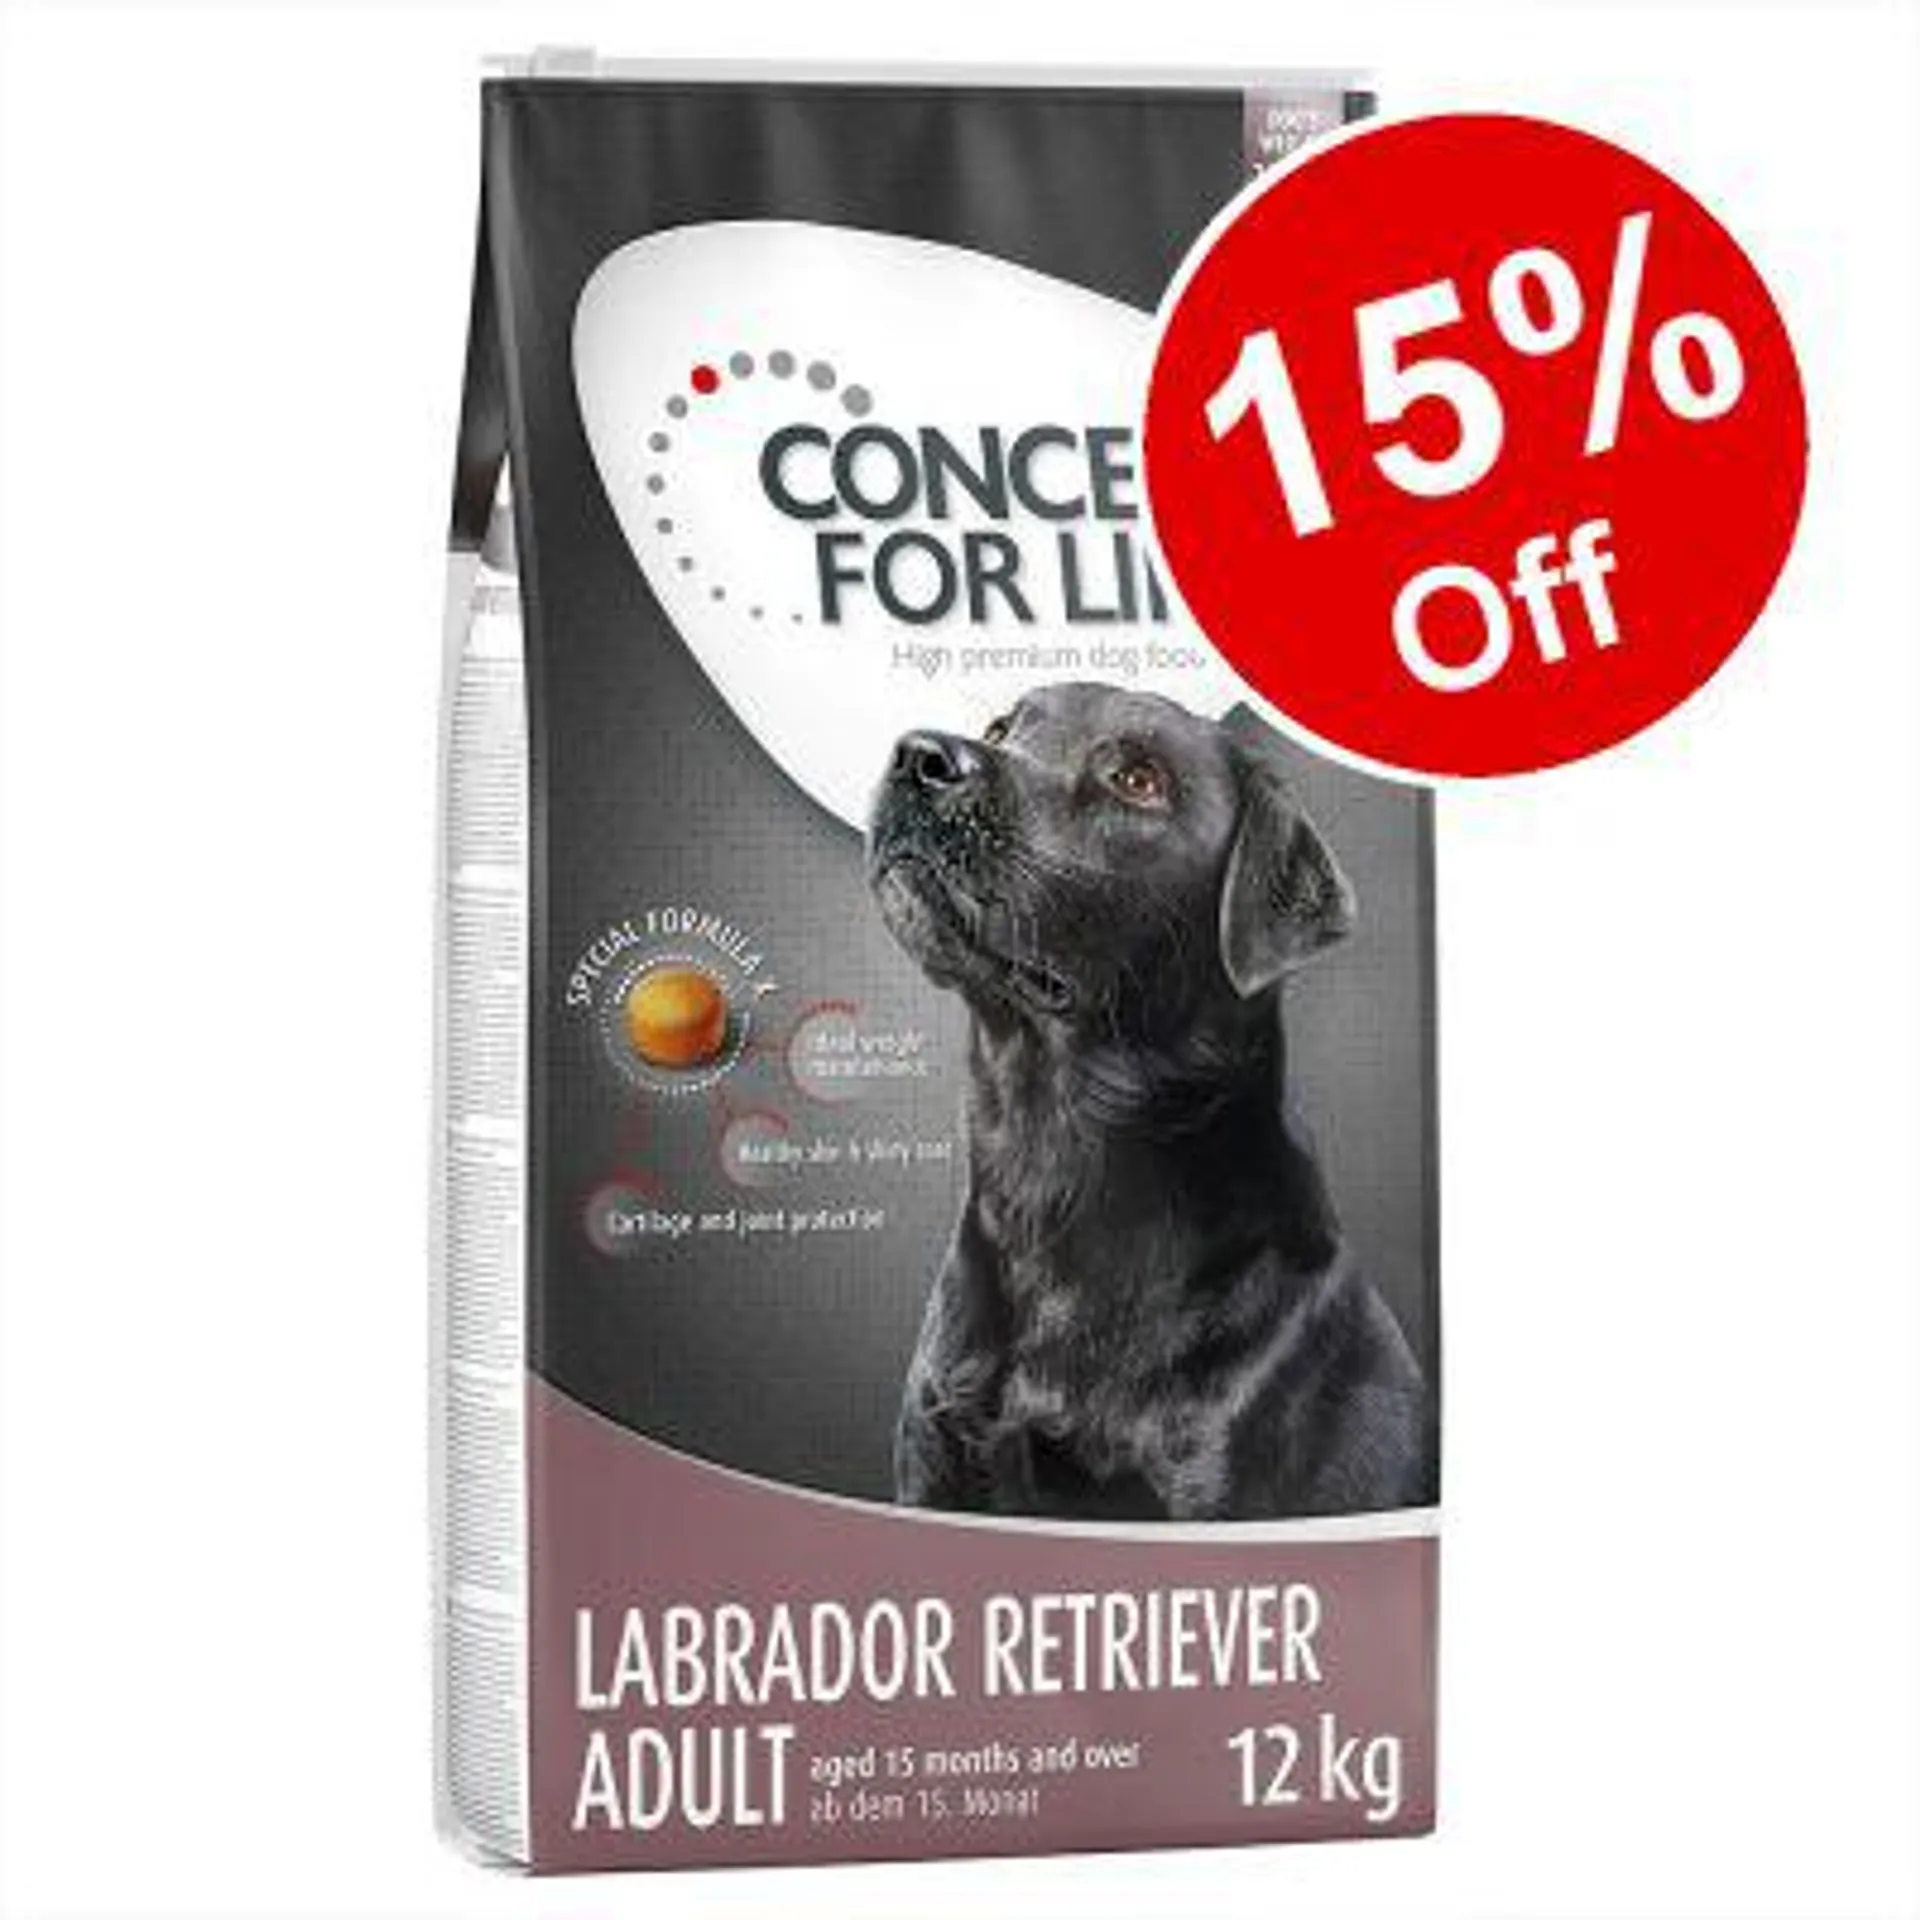 12kg Concept for Life Dry Dog Food - 15% Off!*